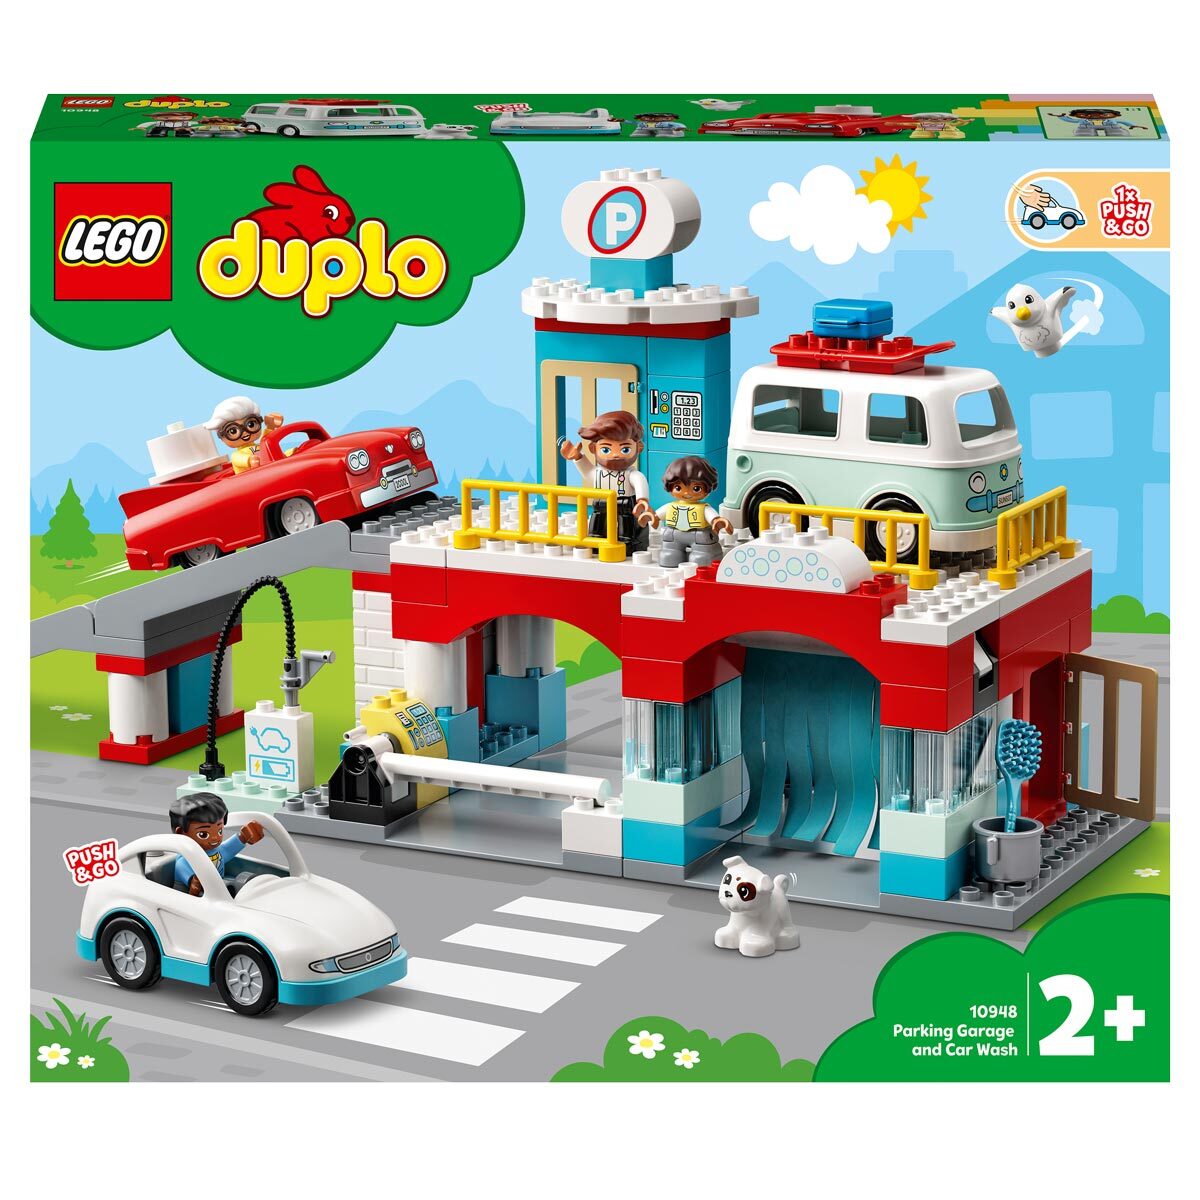 Buy LEGO DUPLO Car Park & Car Wash Box Image at costco.co.uk